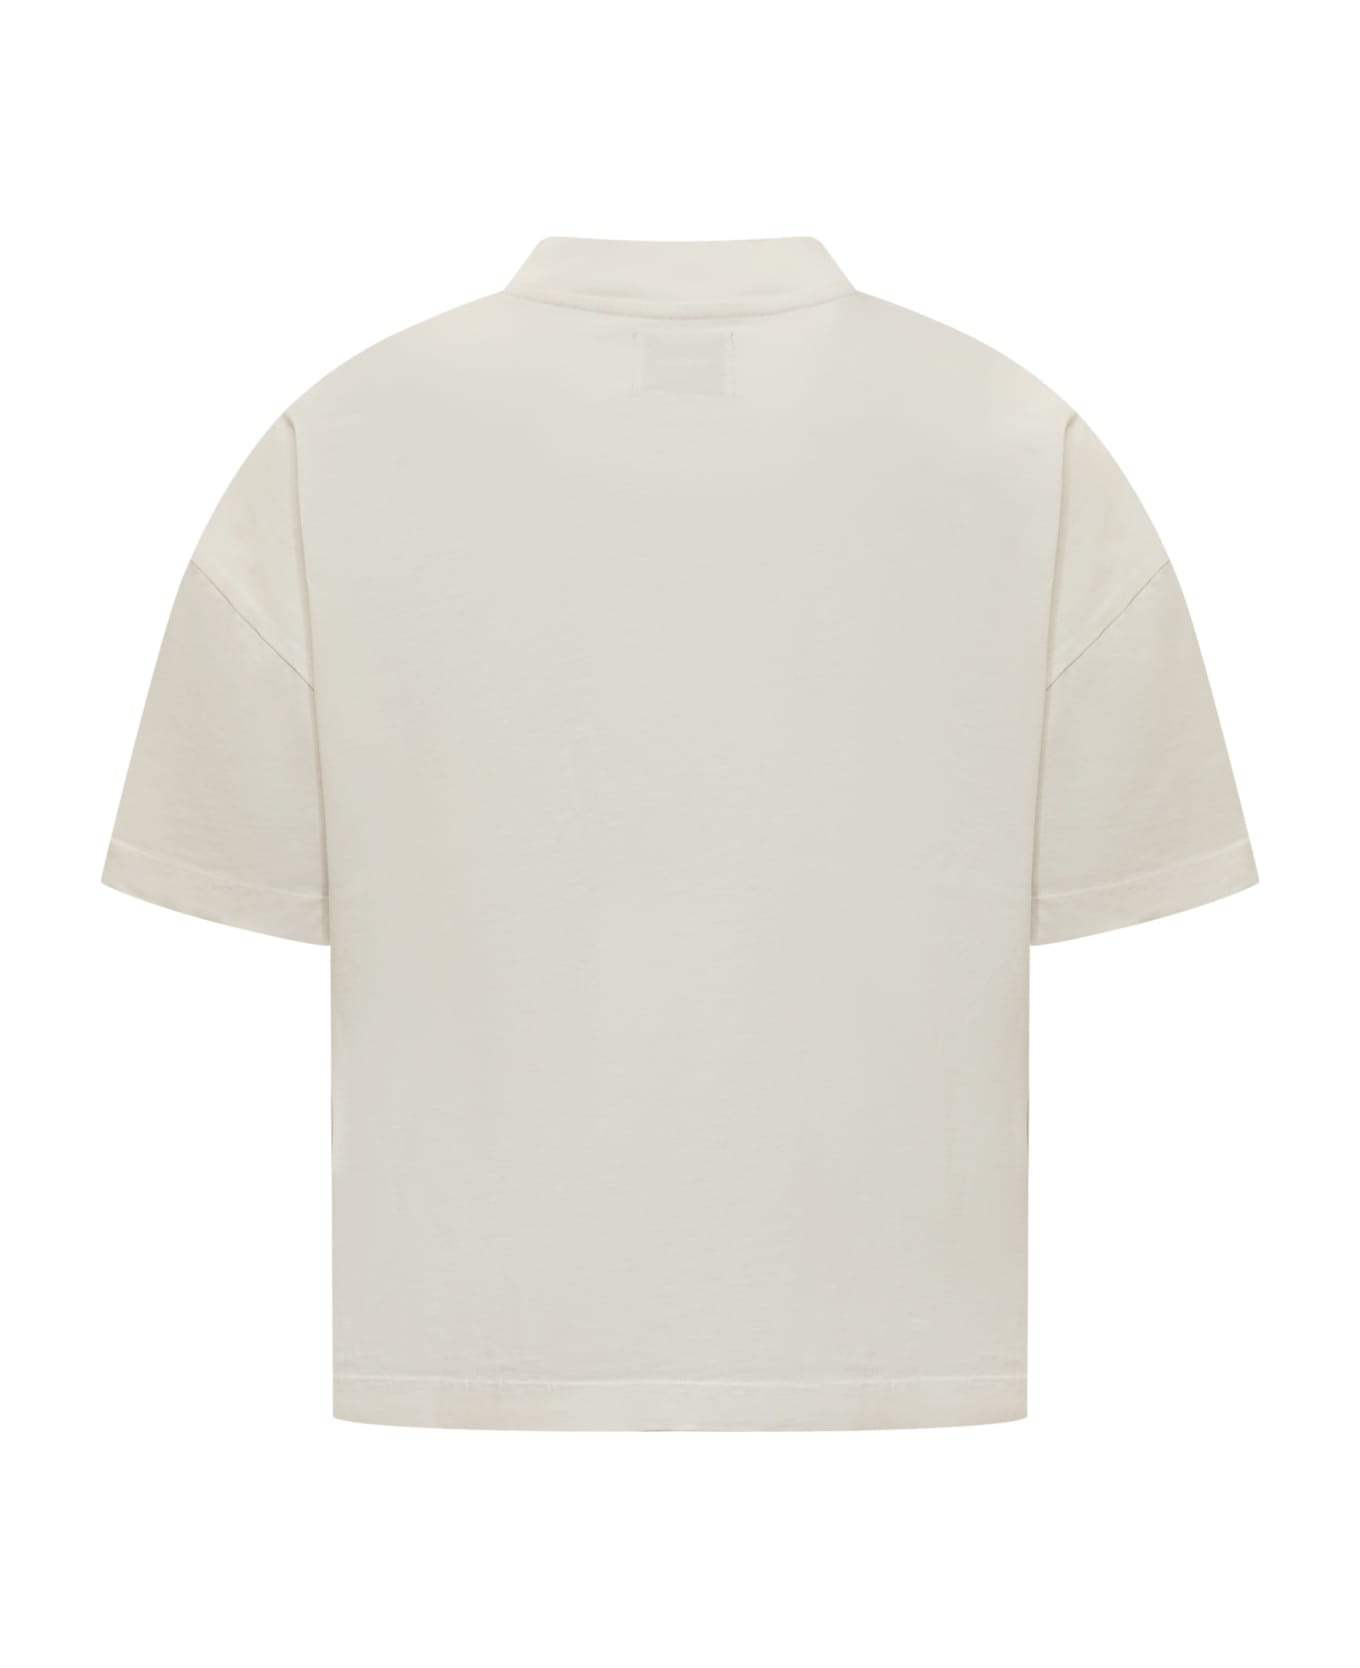 Bonsai Oversize T-shirt - White